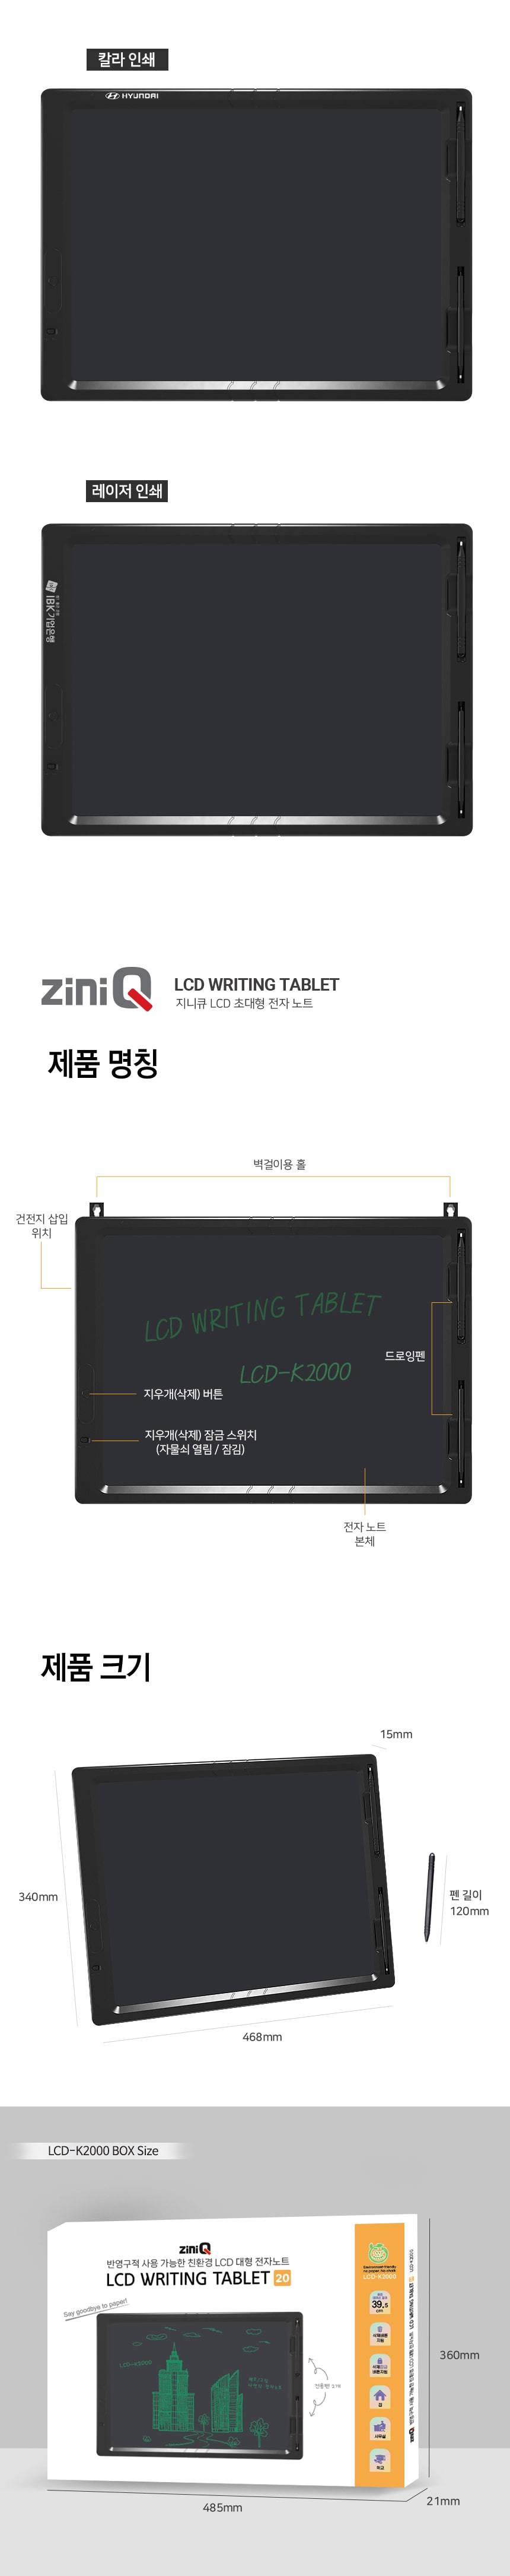 LCD-K2000-6.jpg